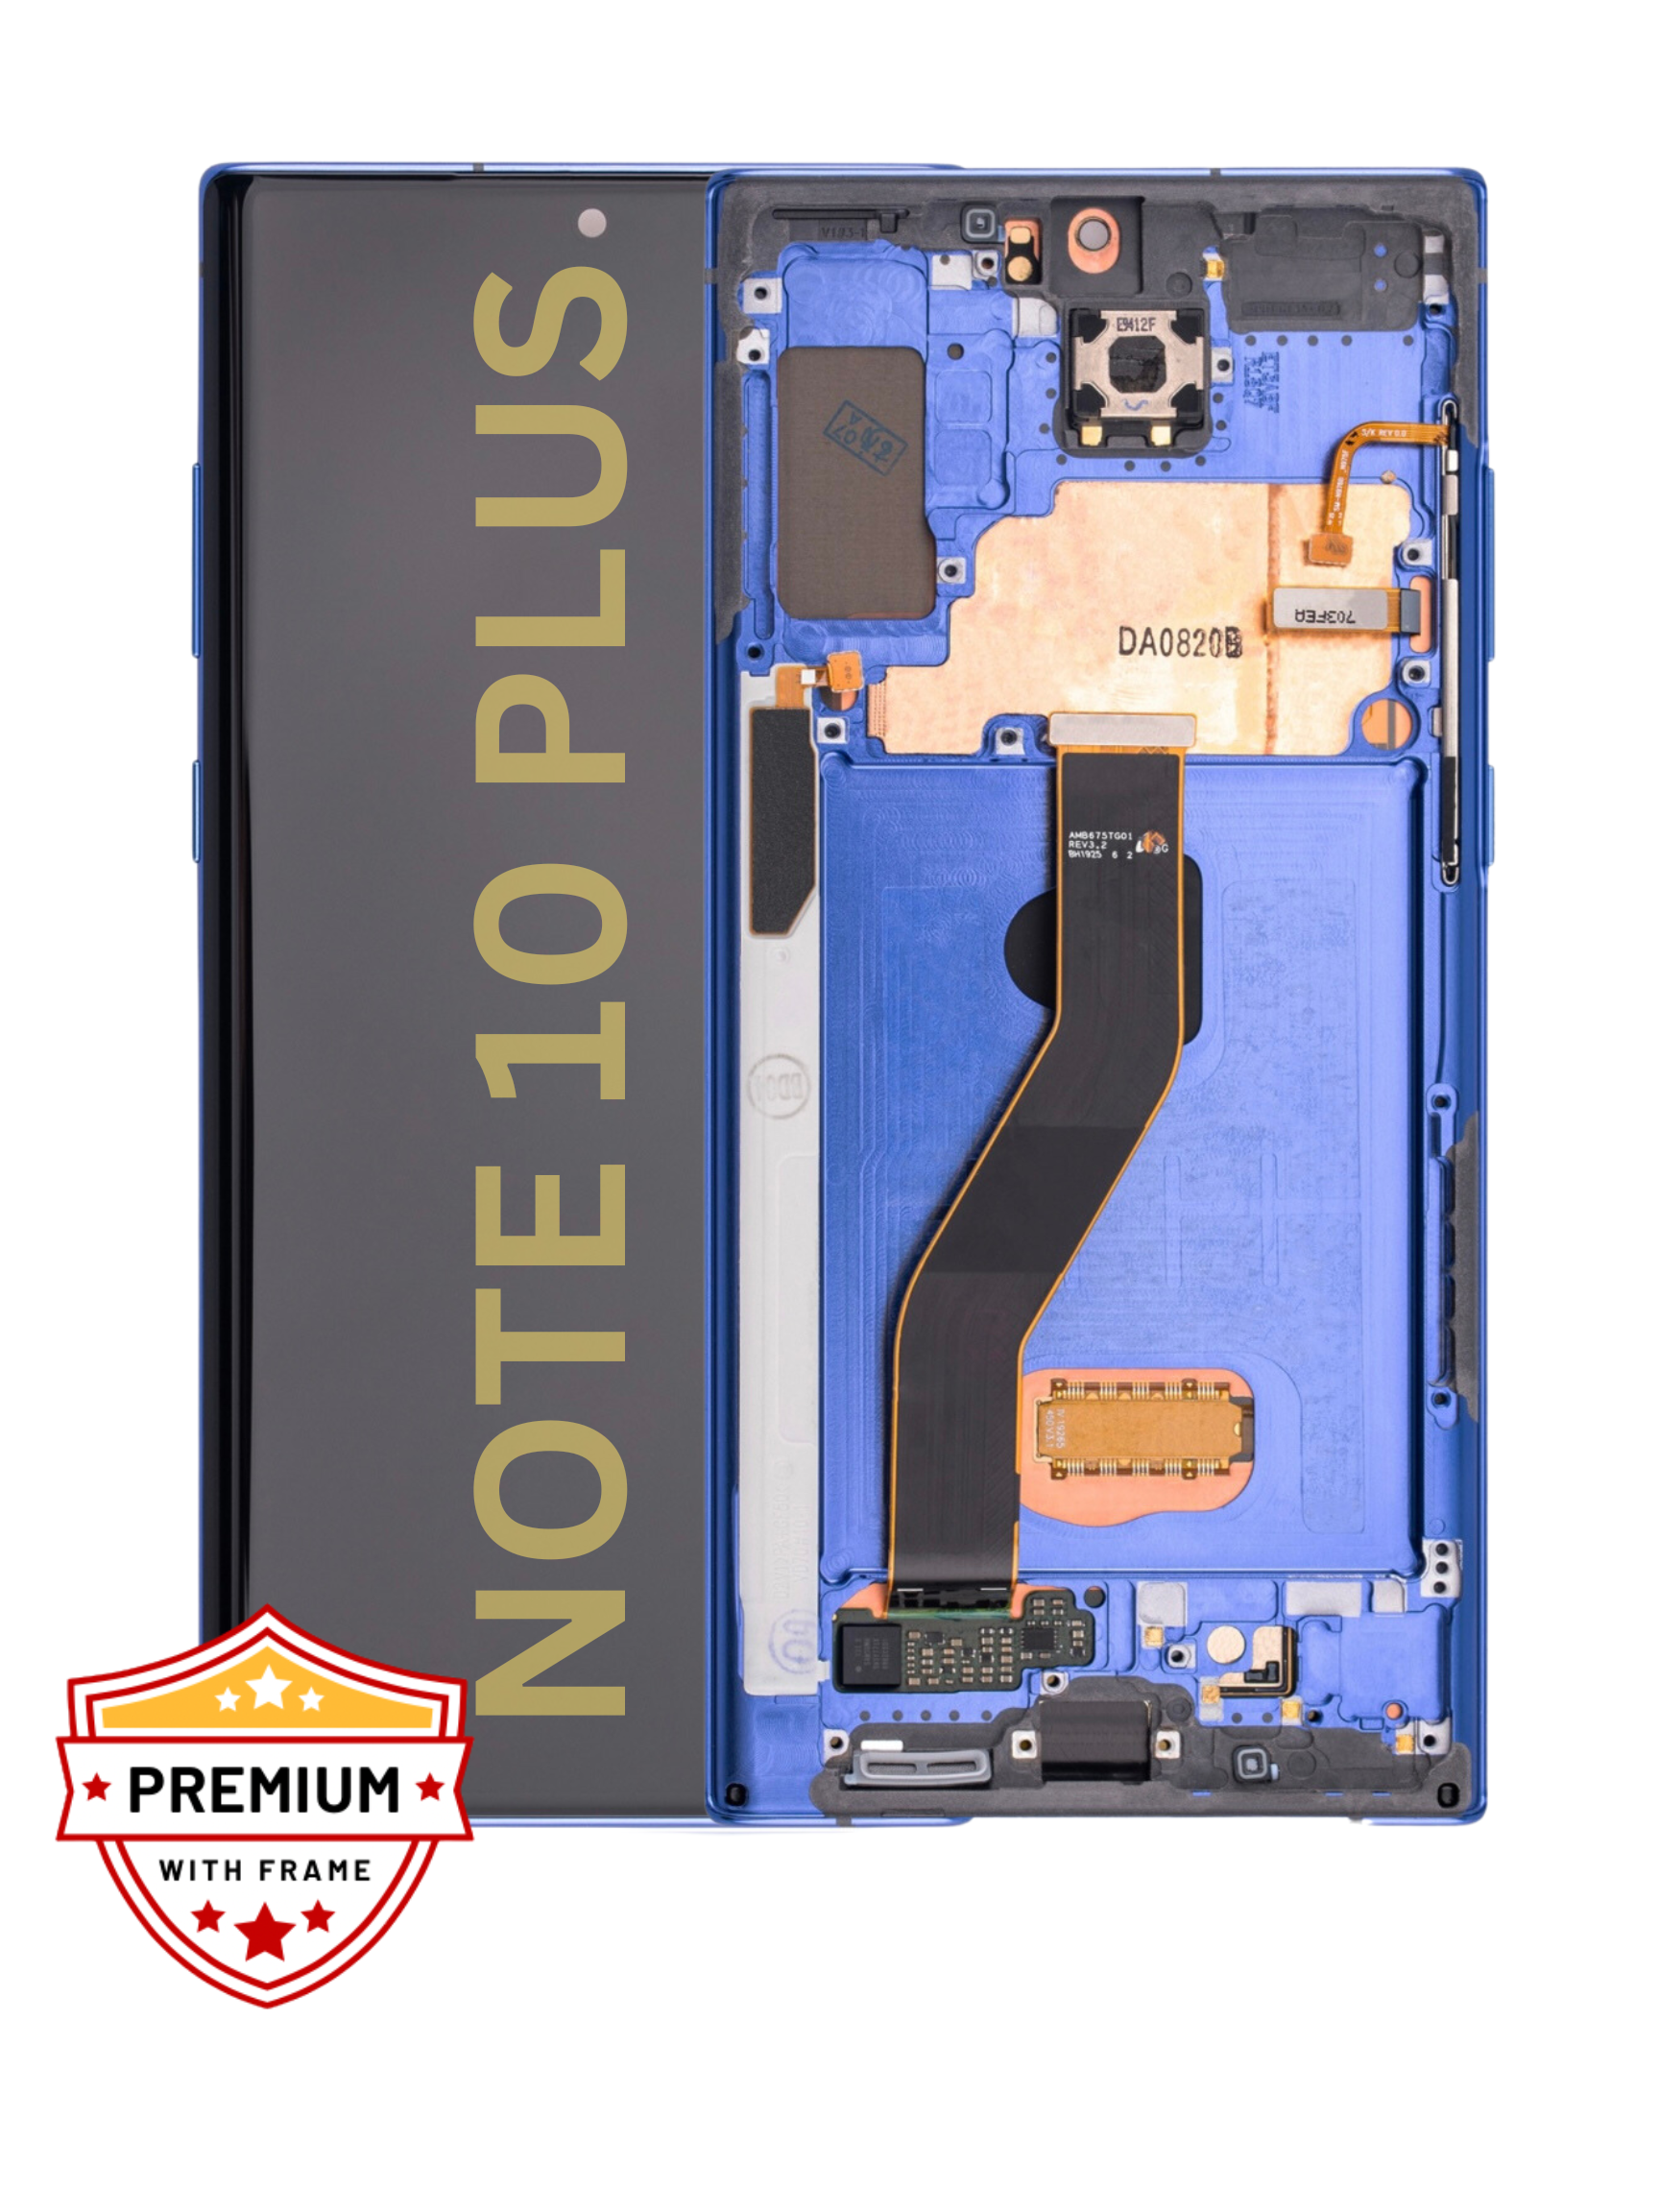 [Refurbished] Samsung Galaxy Note 10 Plus OLED Display with Frame (Aura Glow)